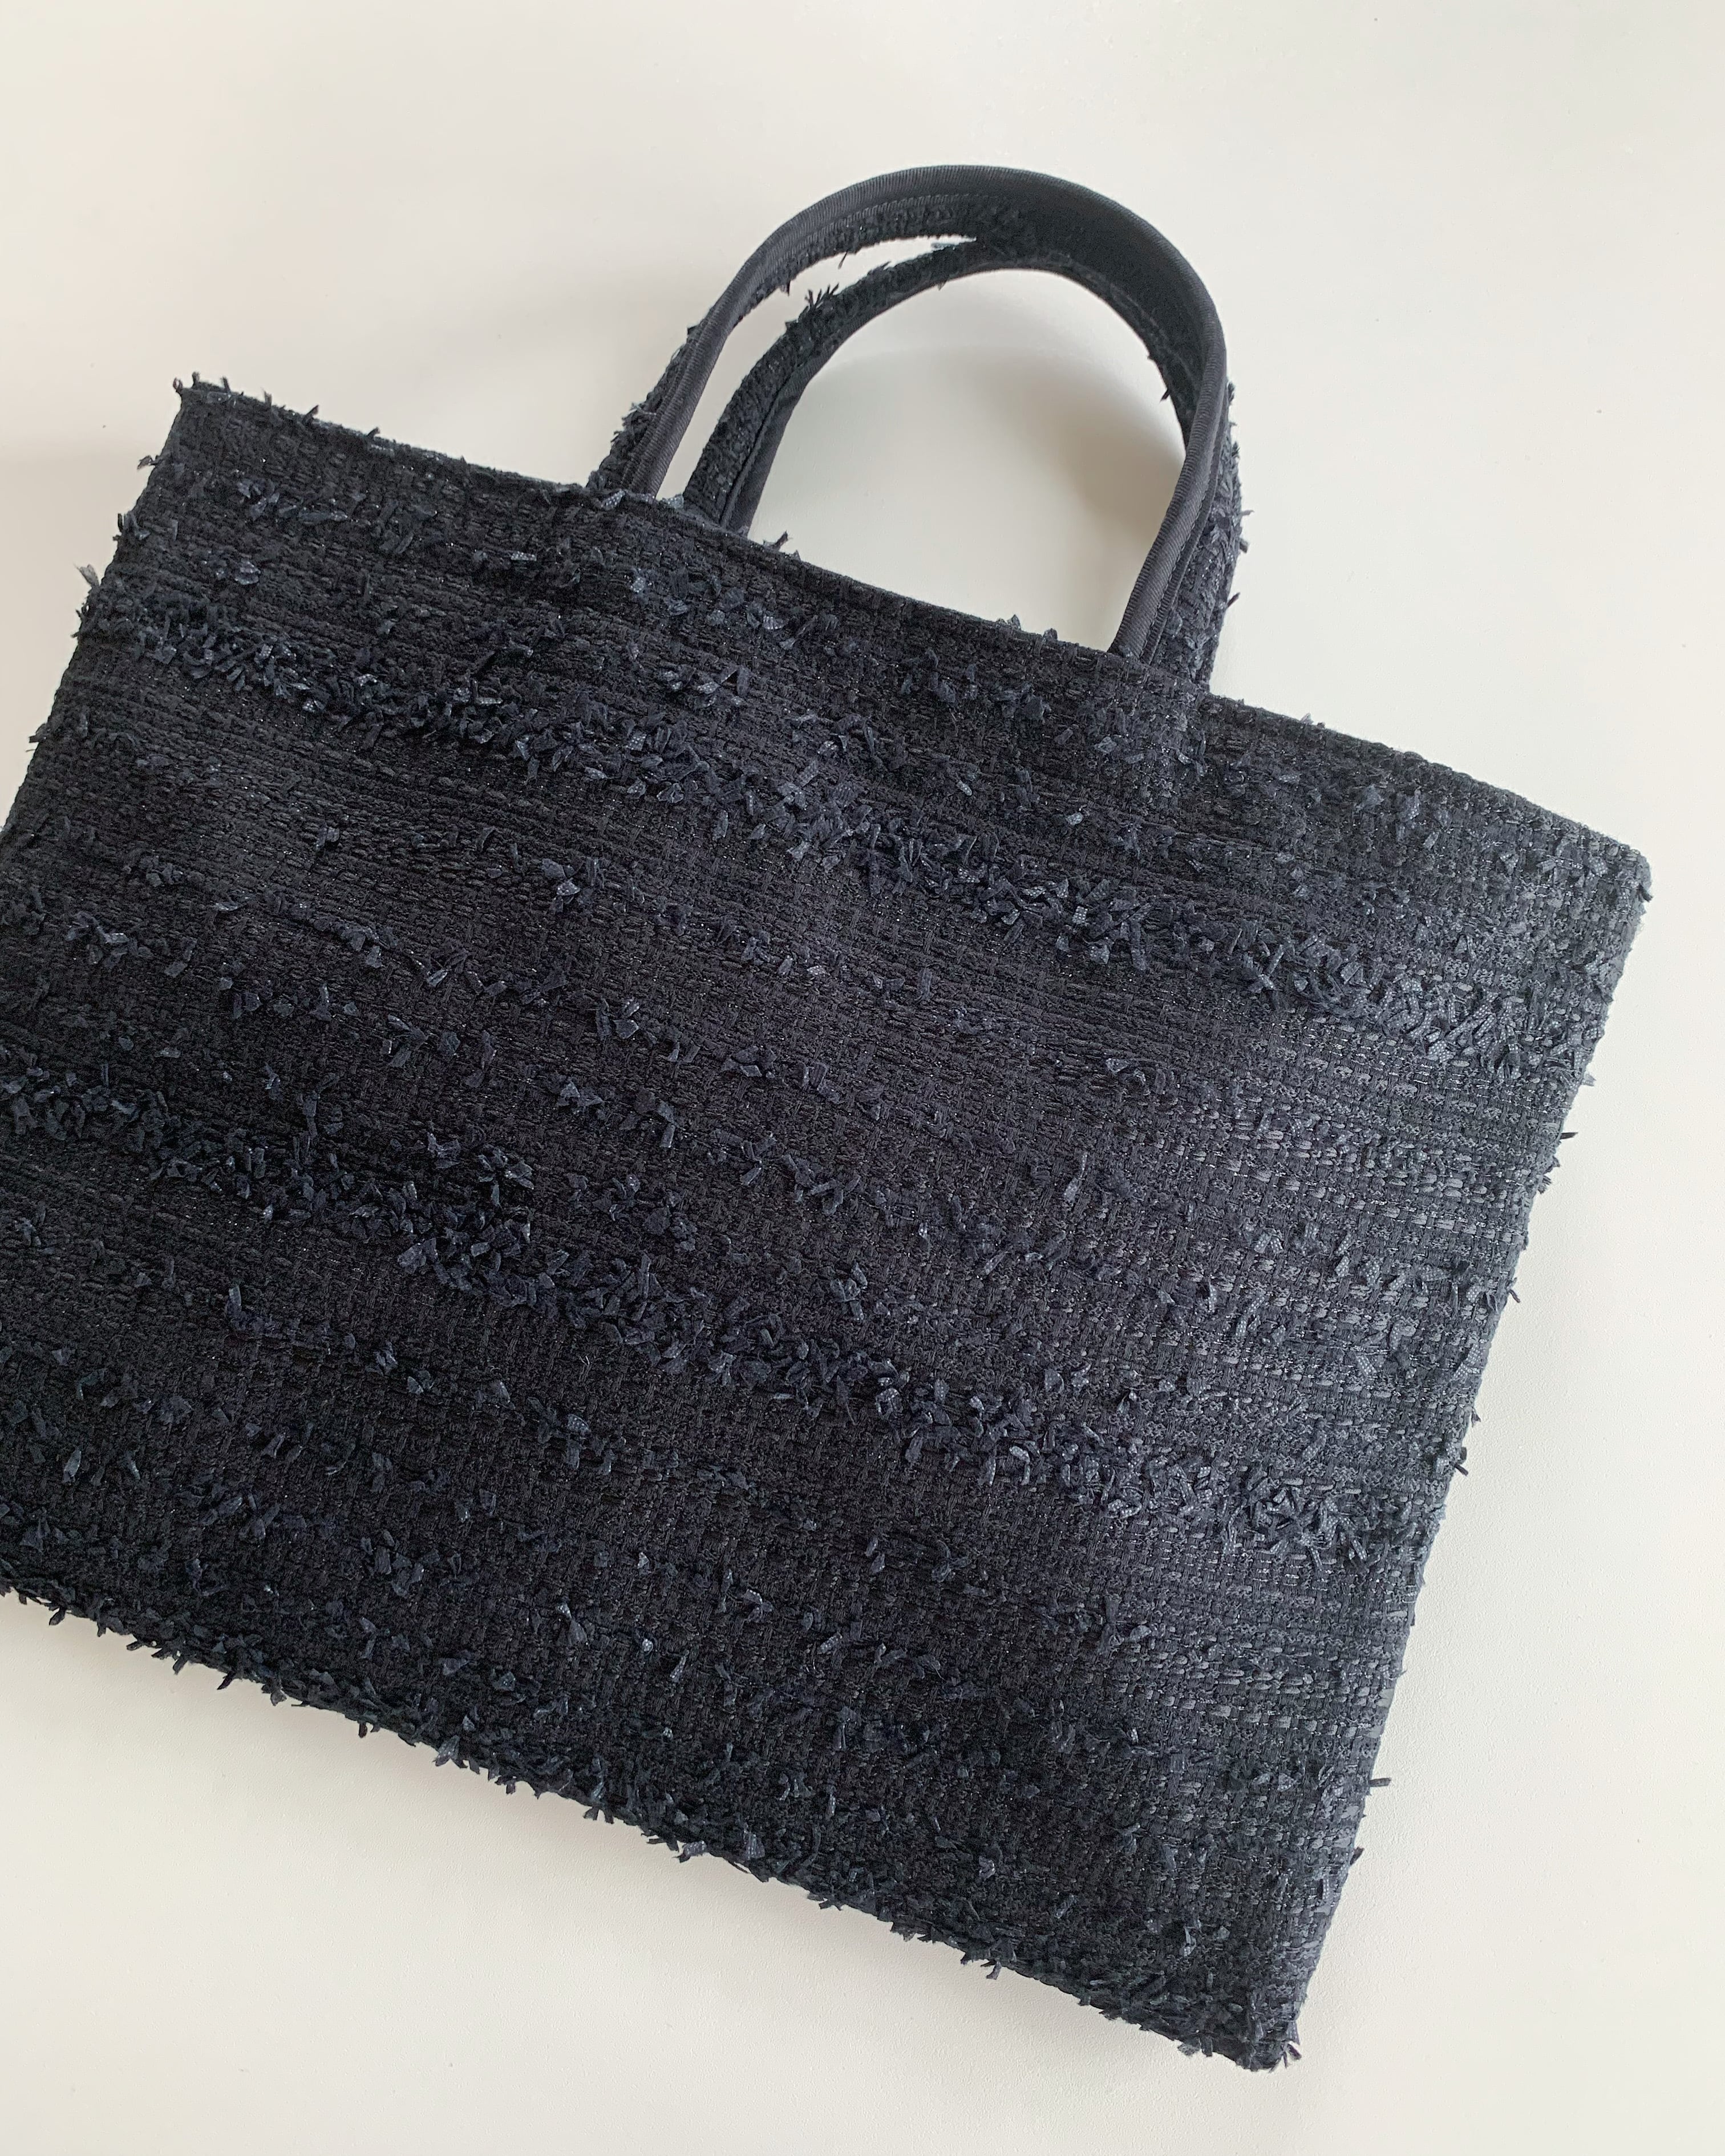 BIBI bag. “LARGE” tweed Noir | BIBI bag presented by BIBI soeurs.